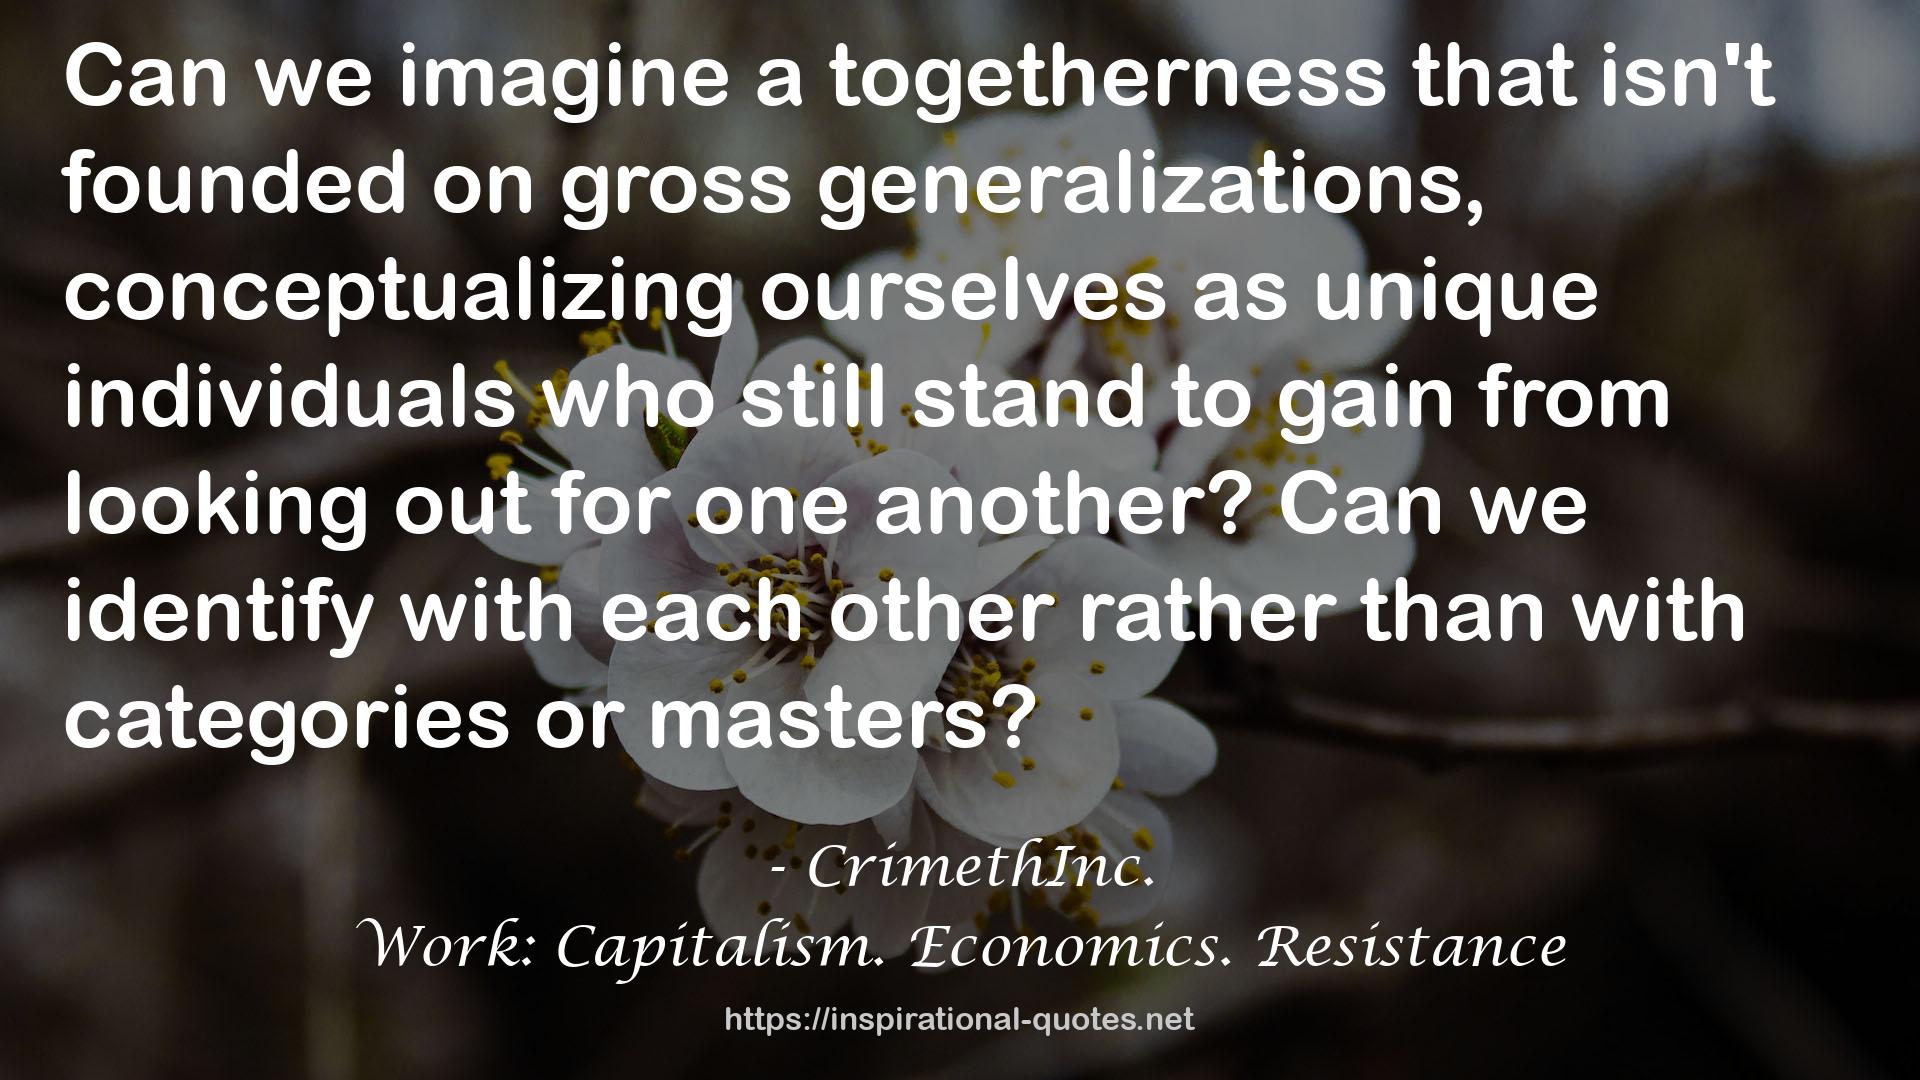 Work: Capitalism. Economics. Resistance QUOTES